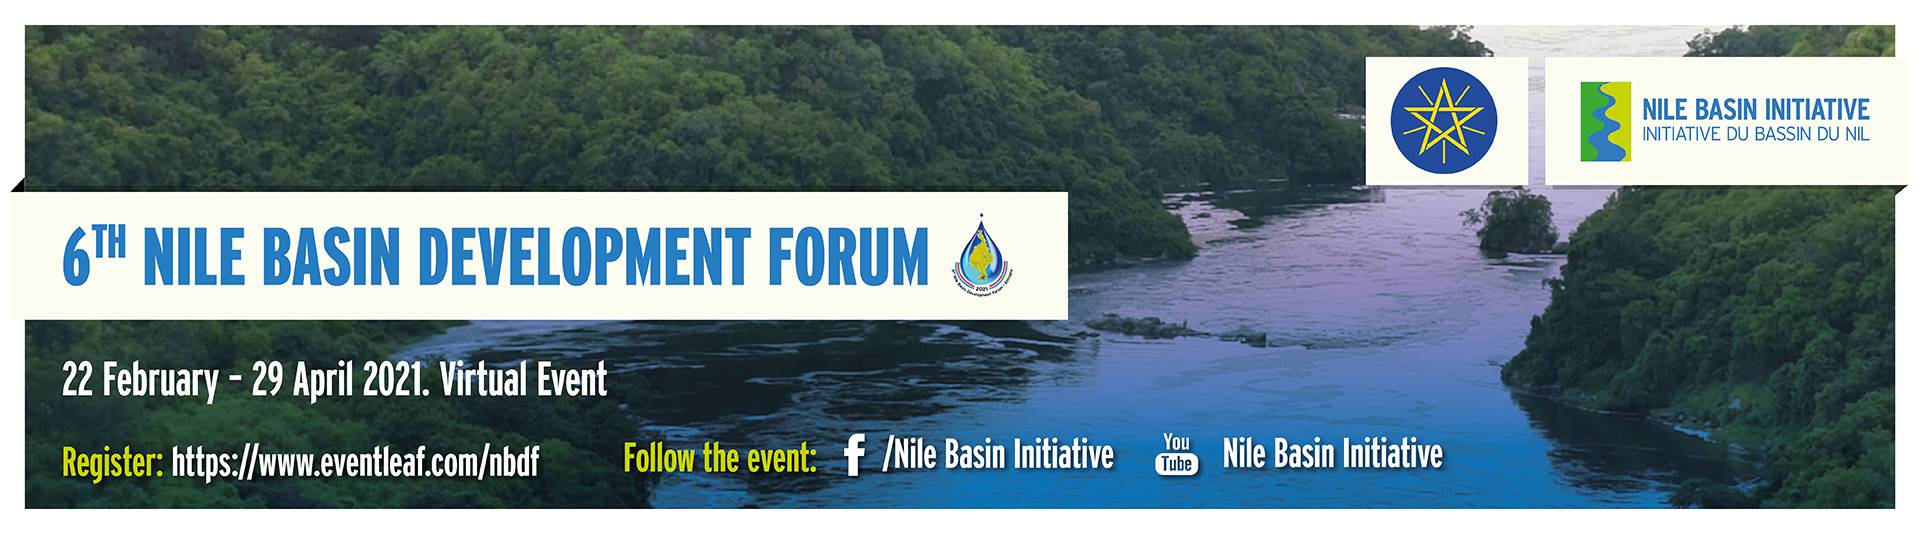 6th Nile Basin Development Forum (NBDF)